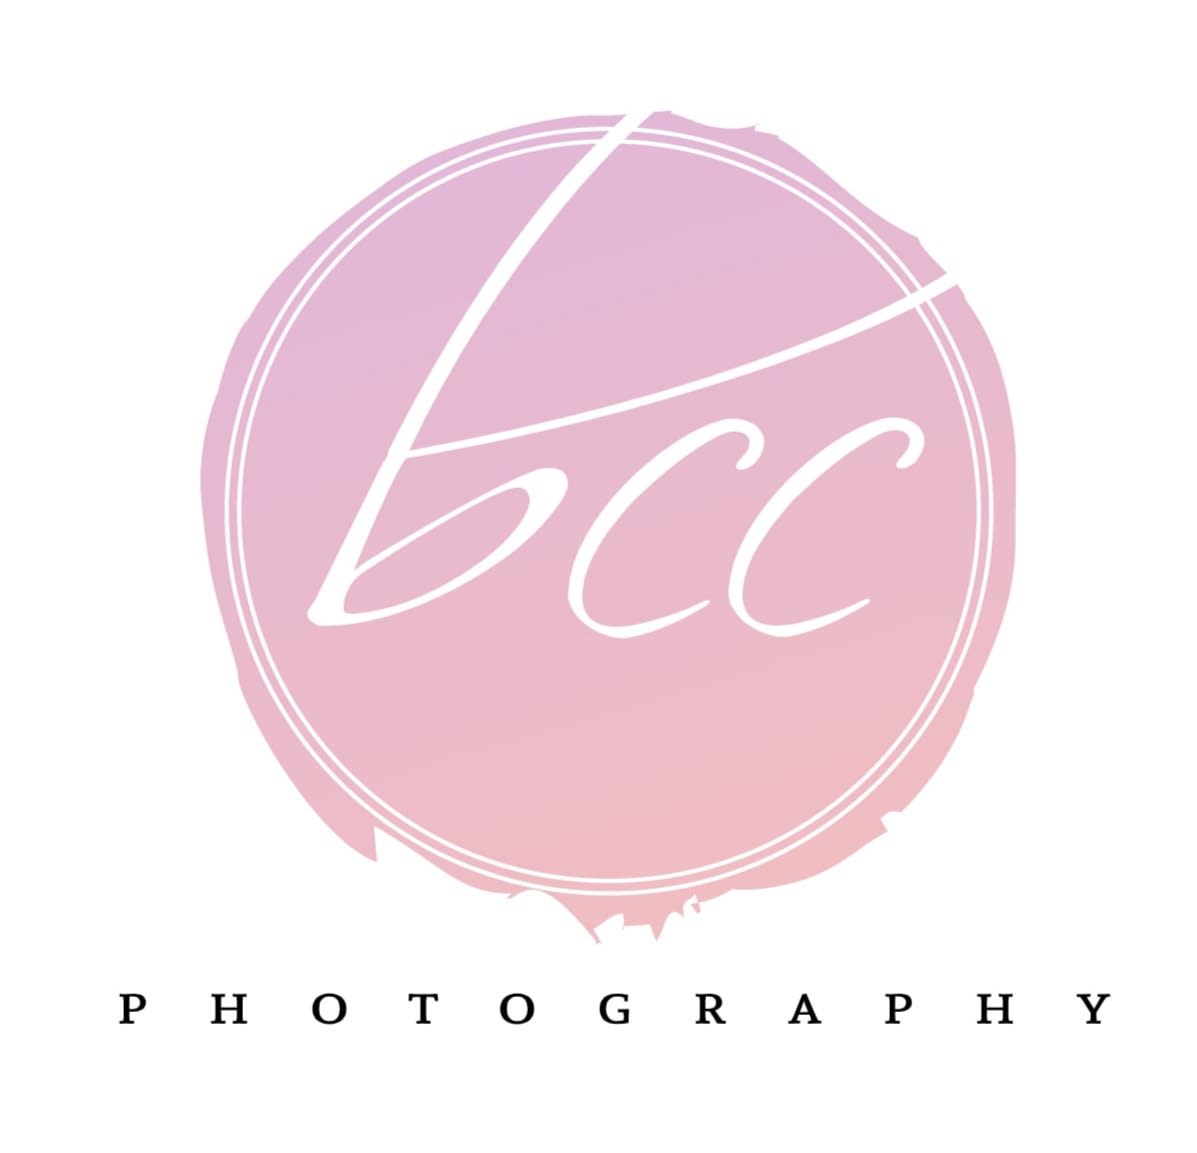 BCC Photography LLC